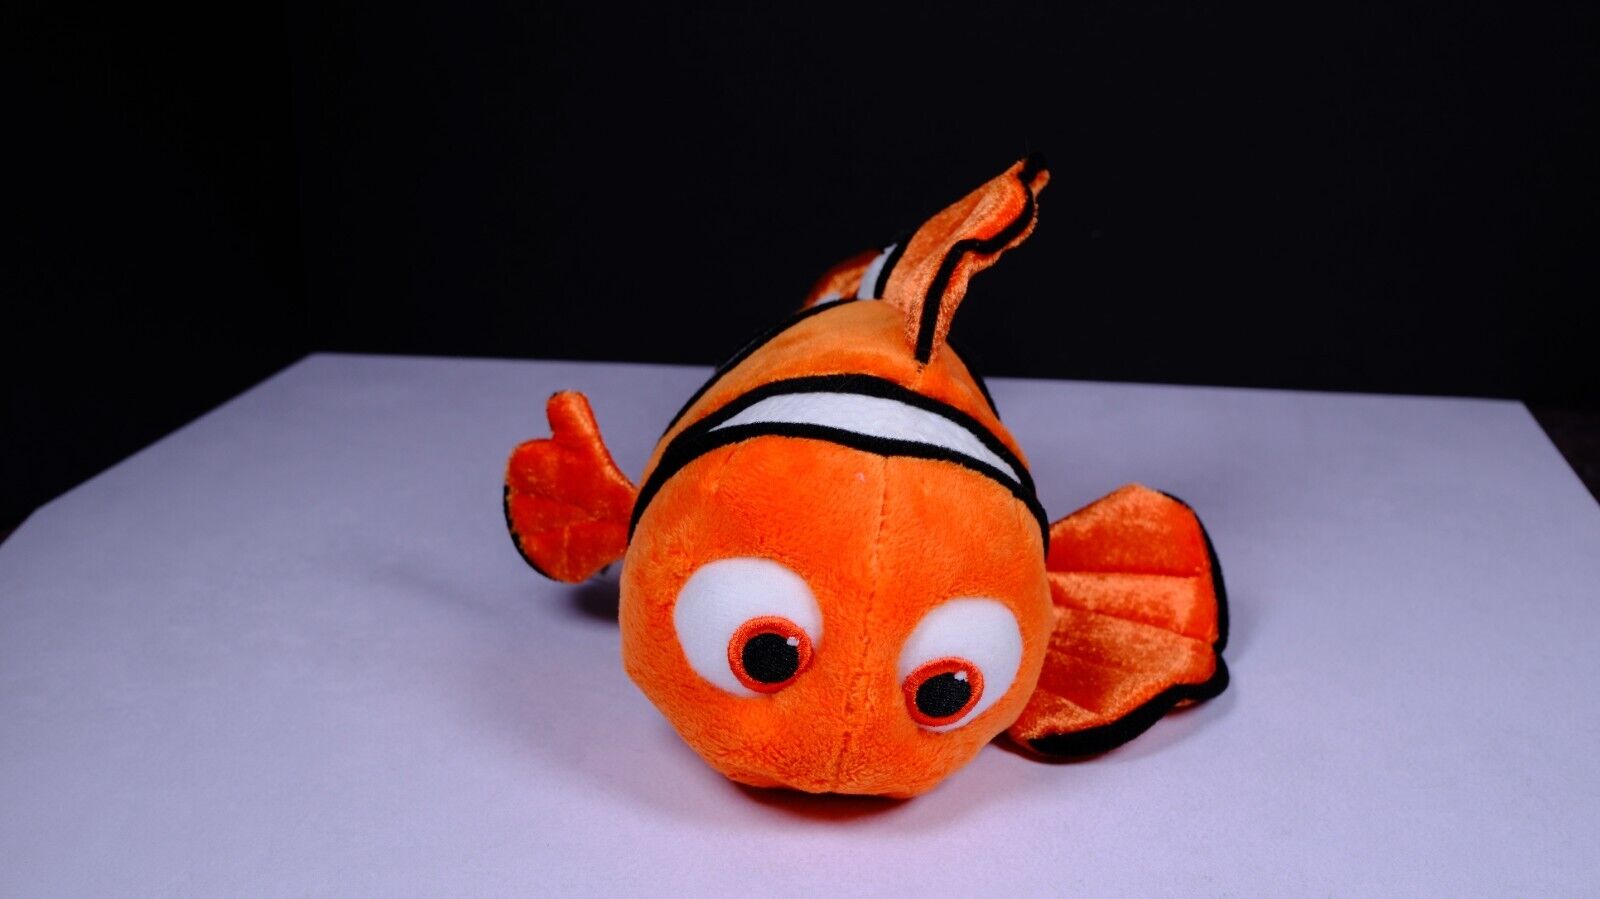 Nemo - Disney Pixar Finding Nemo Plush Stuffed Animal from Disney Store 9 inch